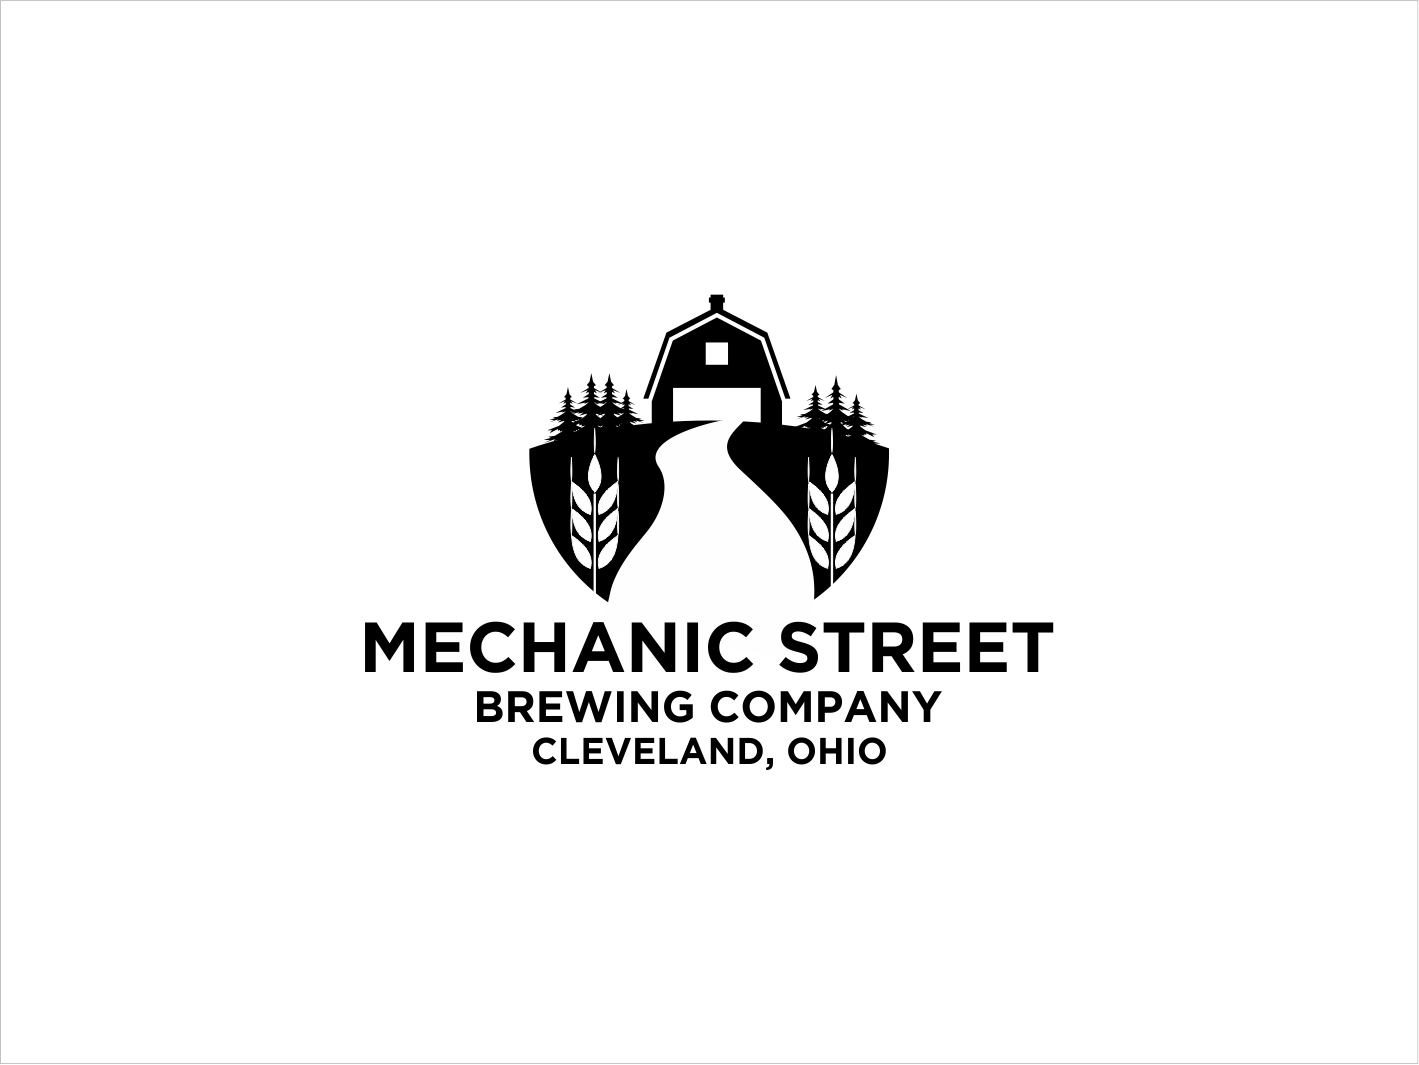 Mechanic Company Logo - Modern, Masculine Logo Design for Mechanic Street Brewing Company